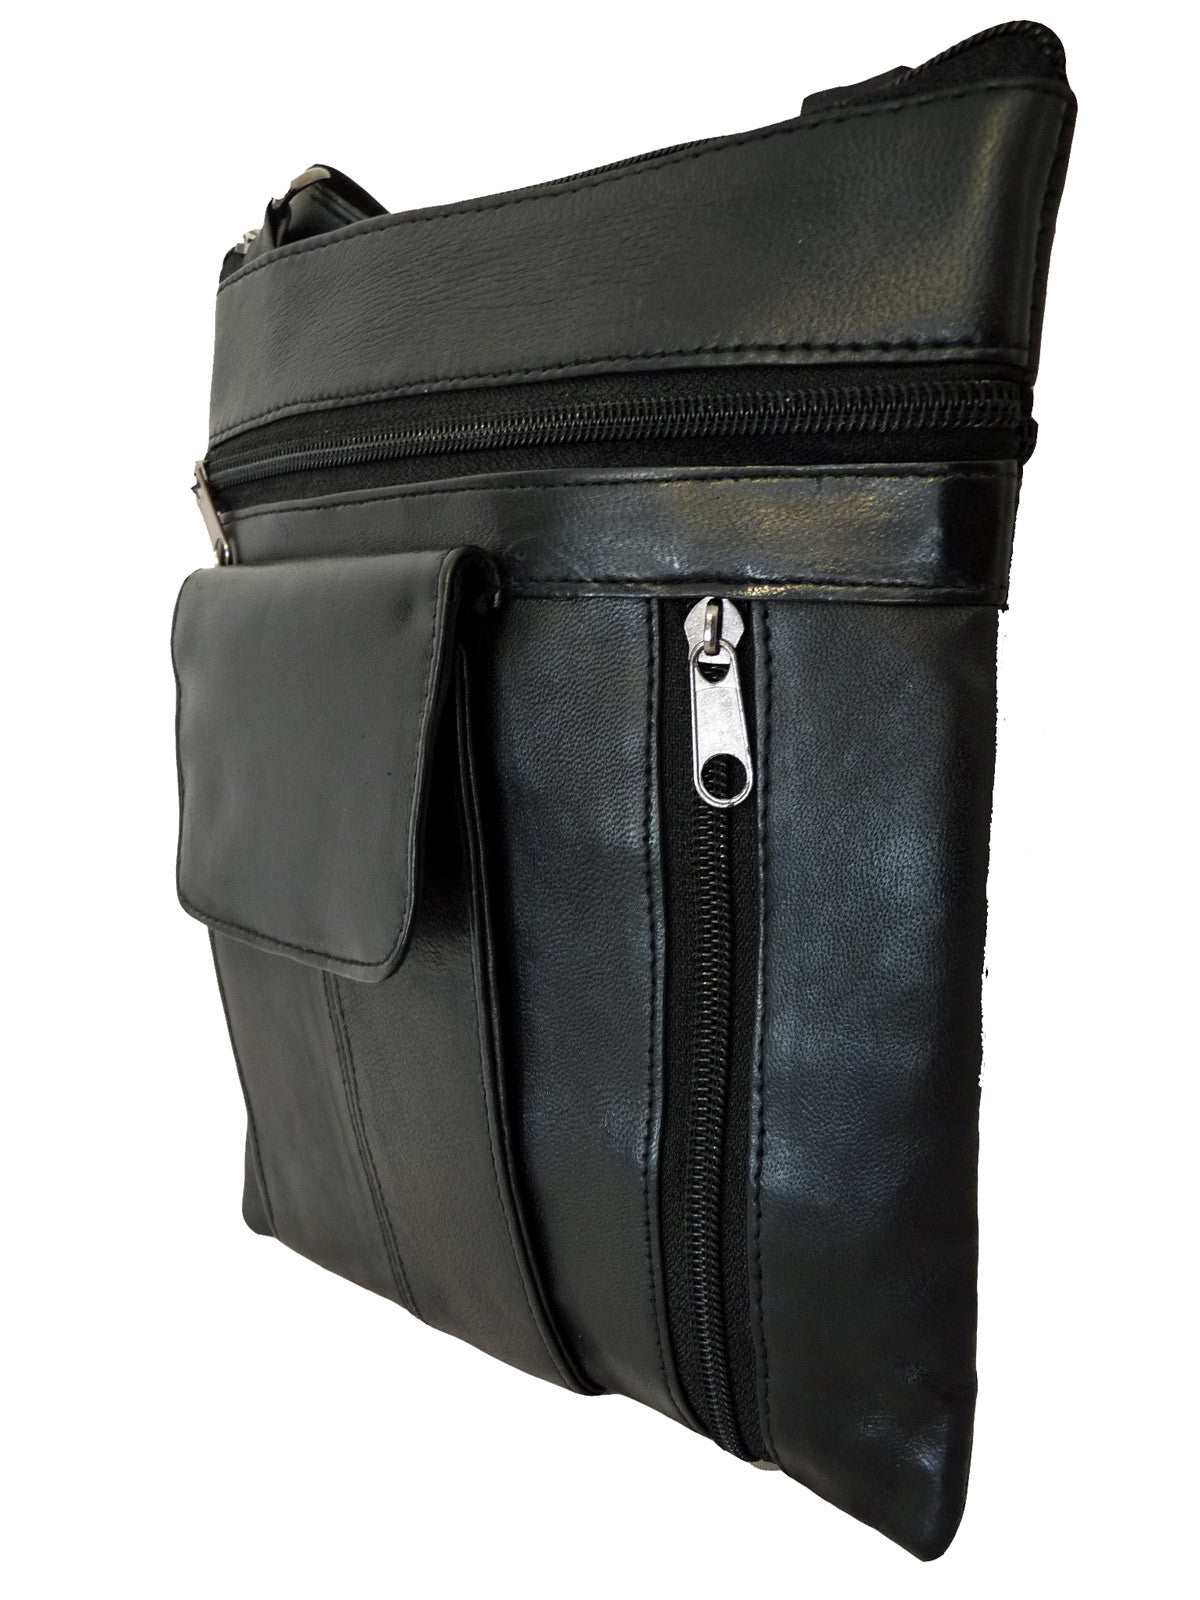 Black Leather Travel Bag Man Bags Holster RL179 - 7Bags